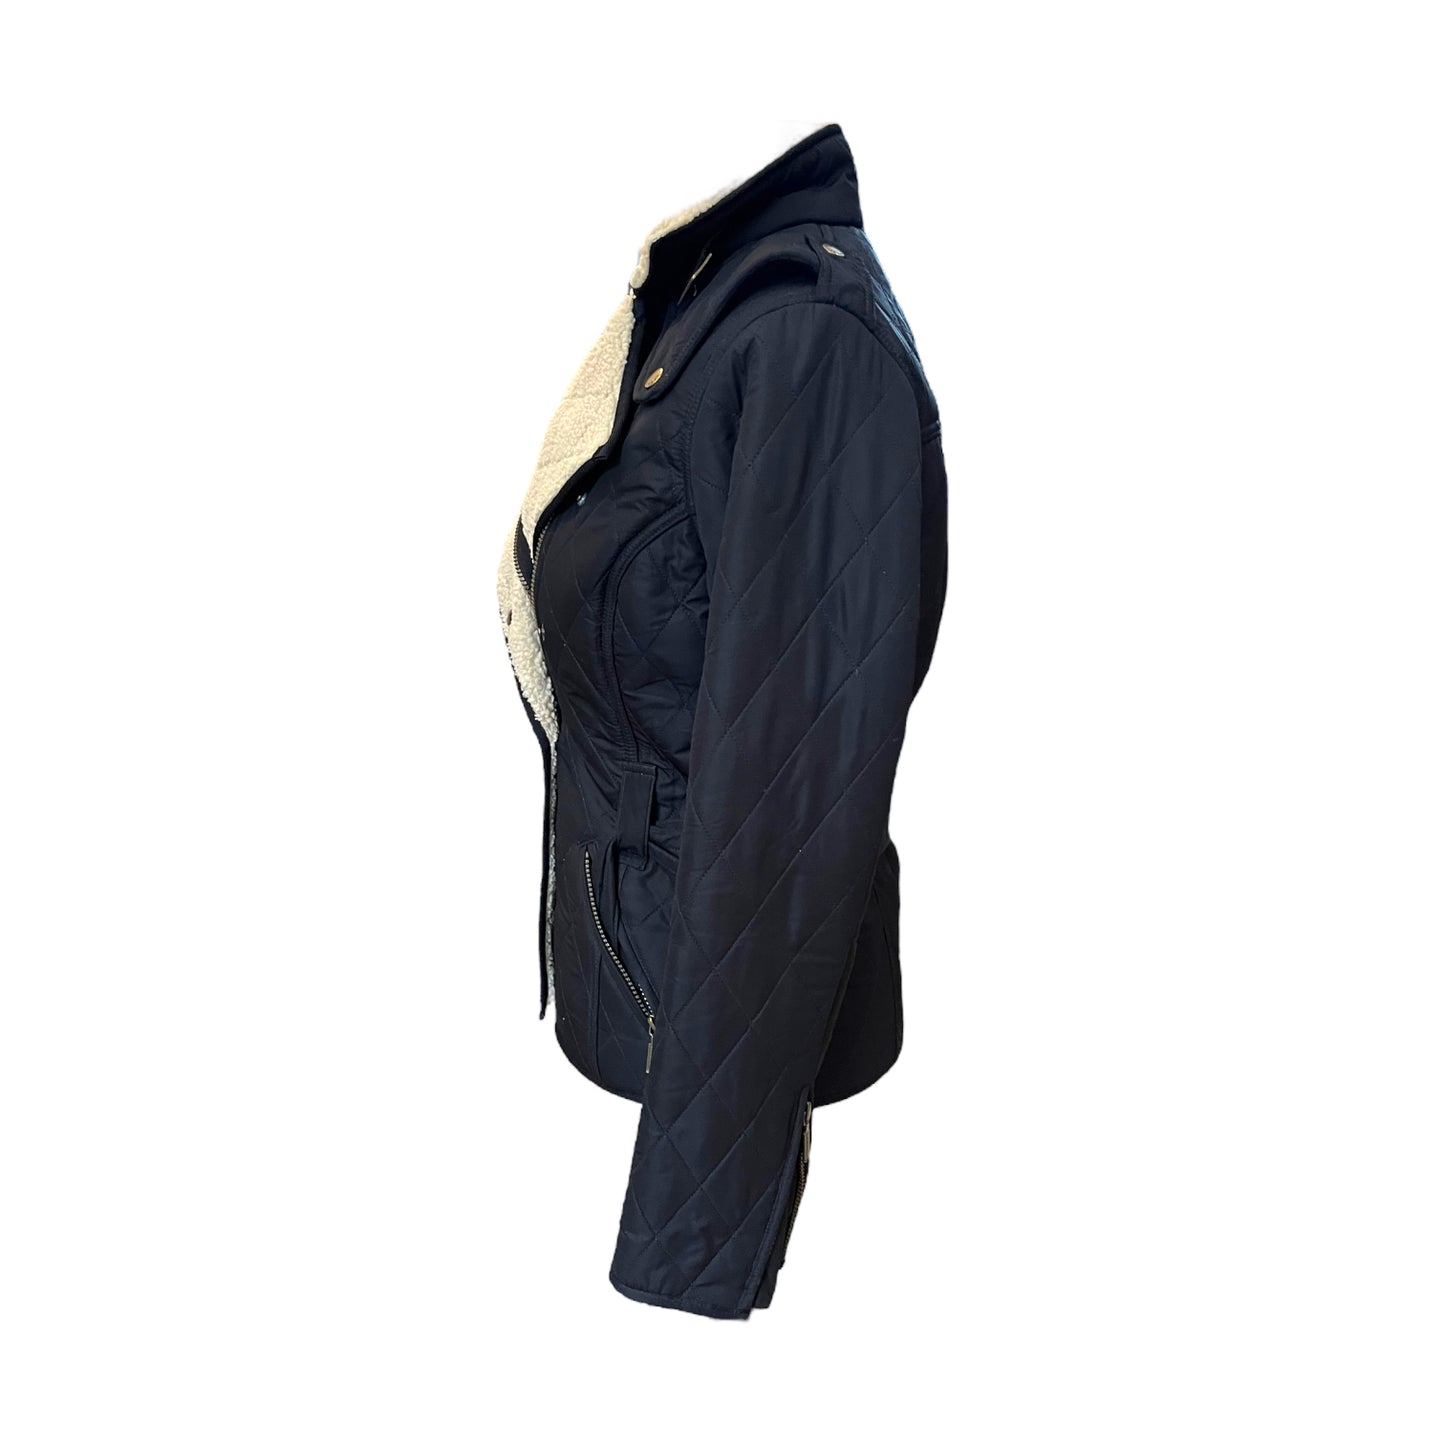 Barbour Black Fleece Lined Jacket